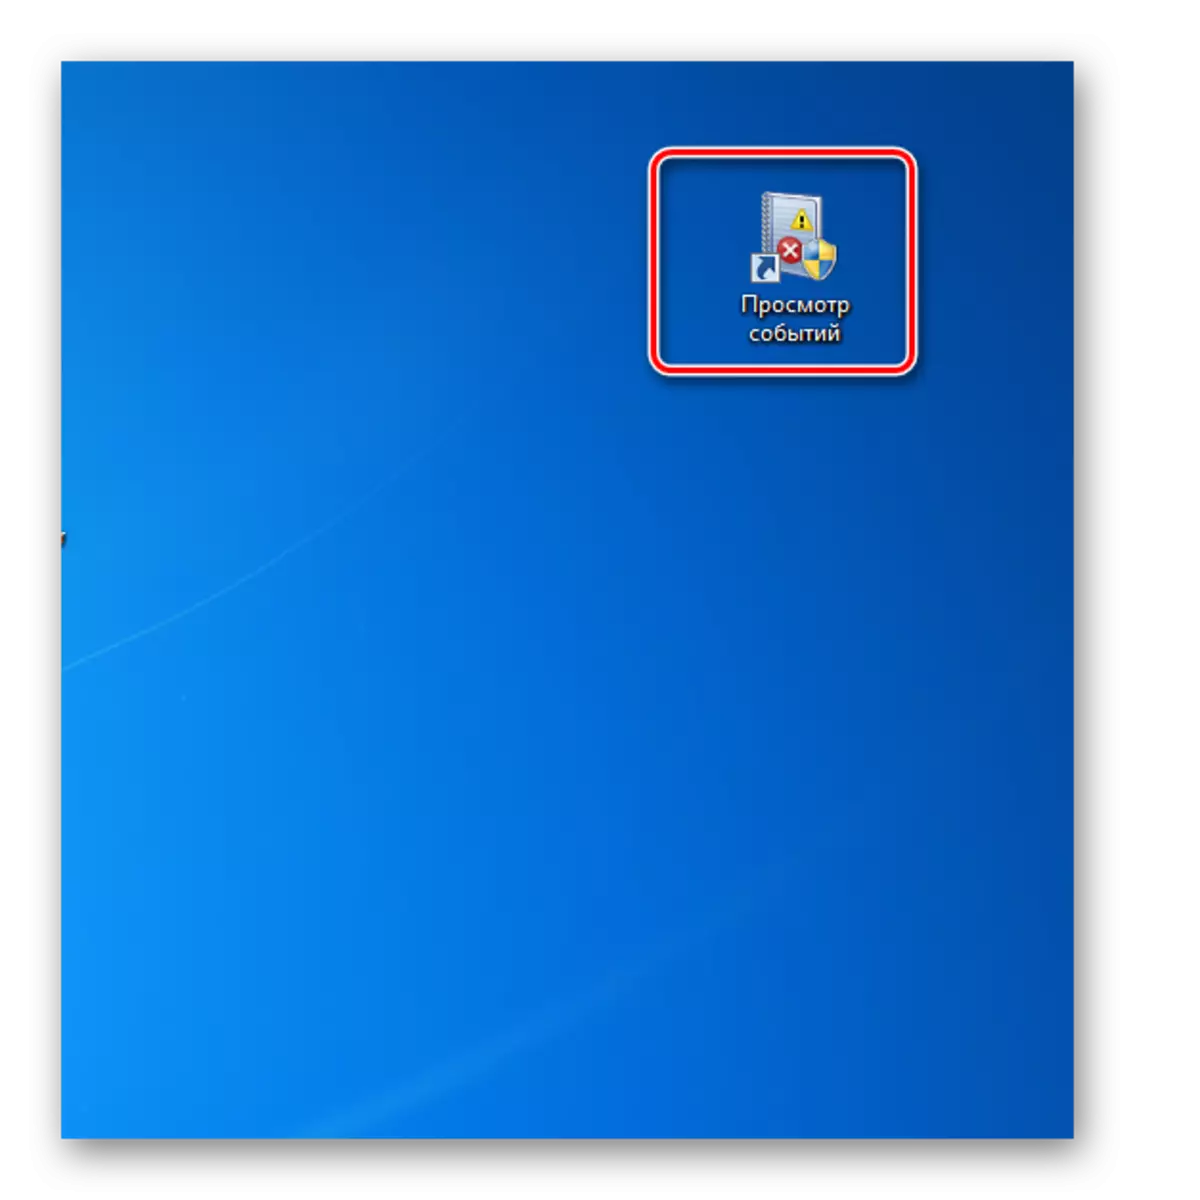 Qala Ithuluzi Buka Imicimbi usebenzisa i-Shortcut kwi-Desktop ku-Windows 7